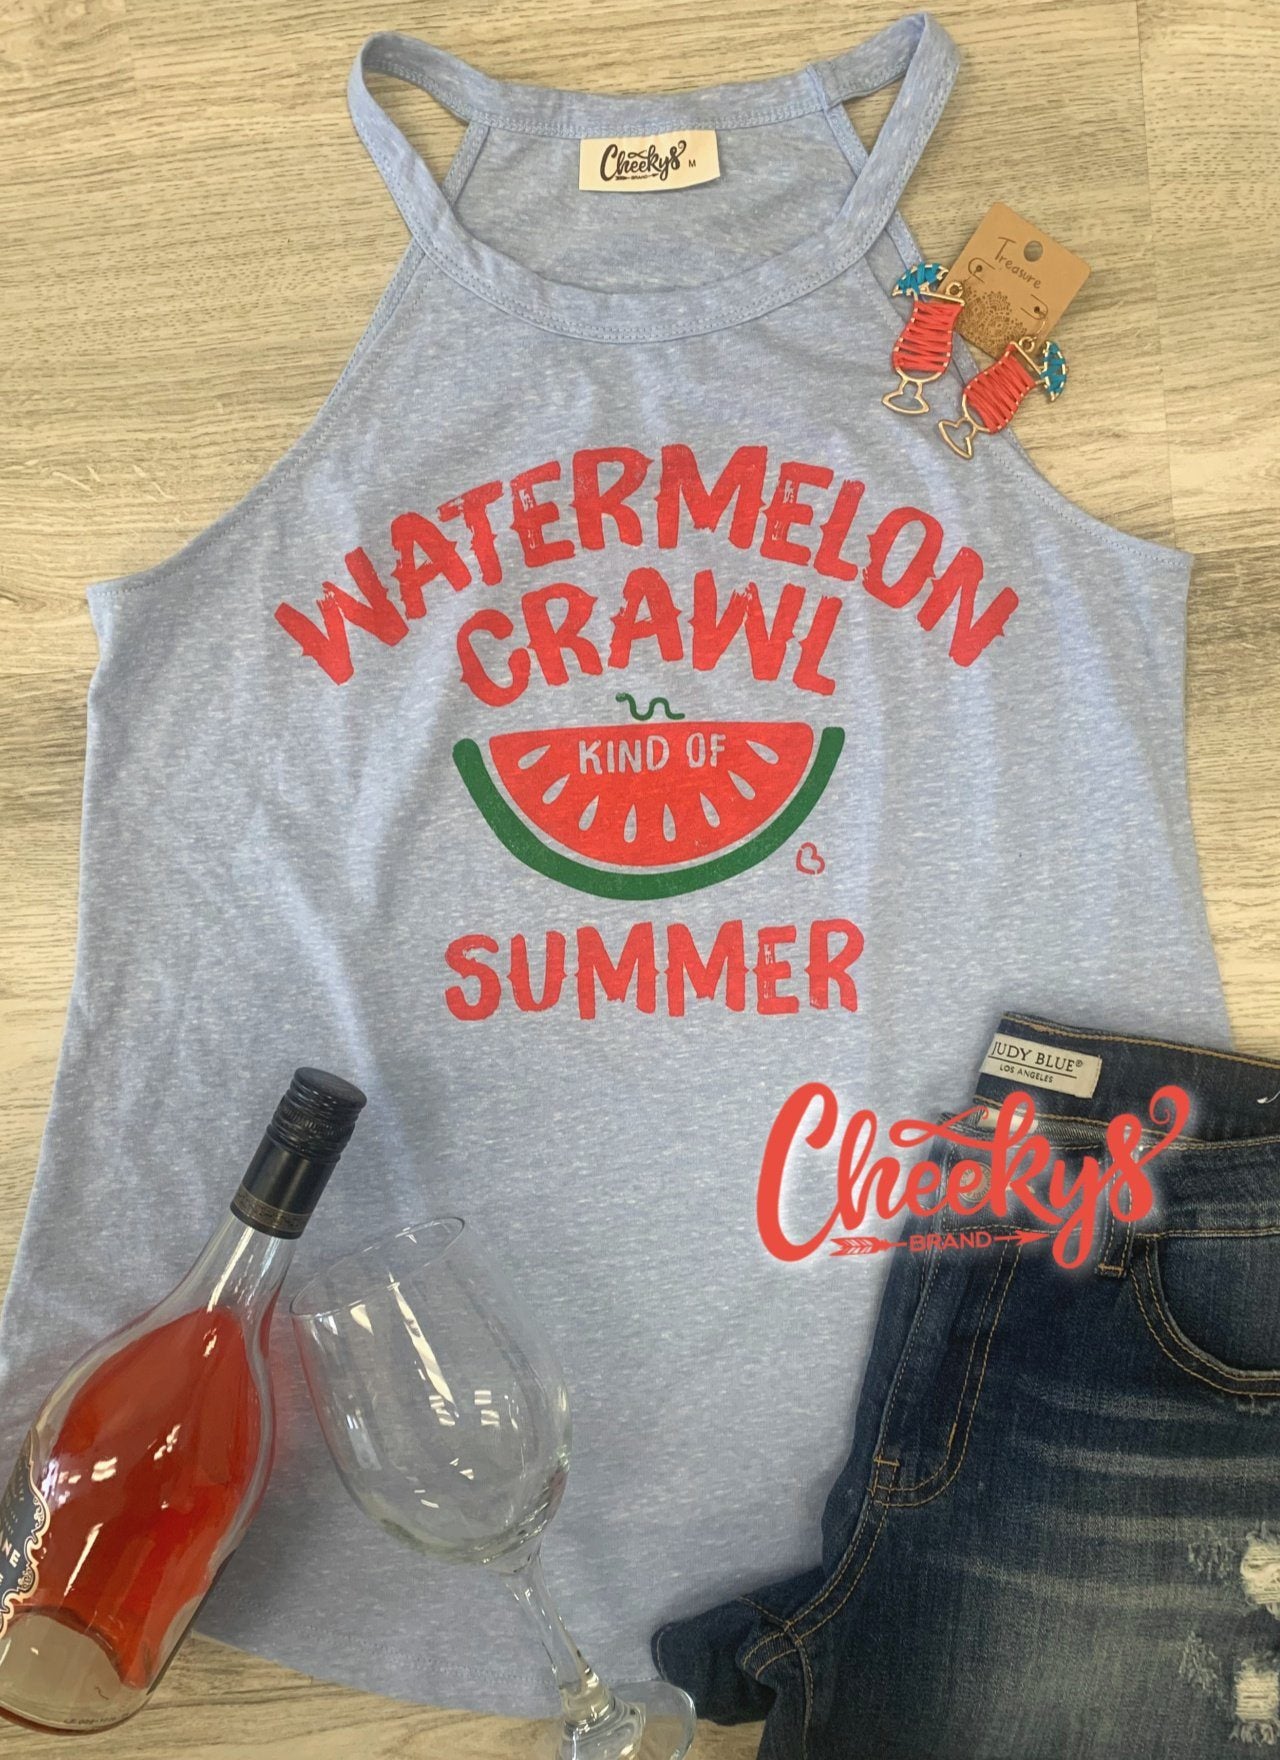 Watermelon Crawl Kind of Summer Tank on Periwinkle Cheekys Apparel 23 